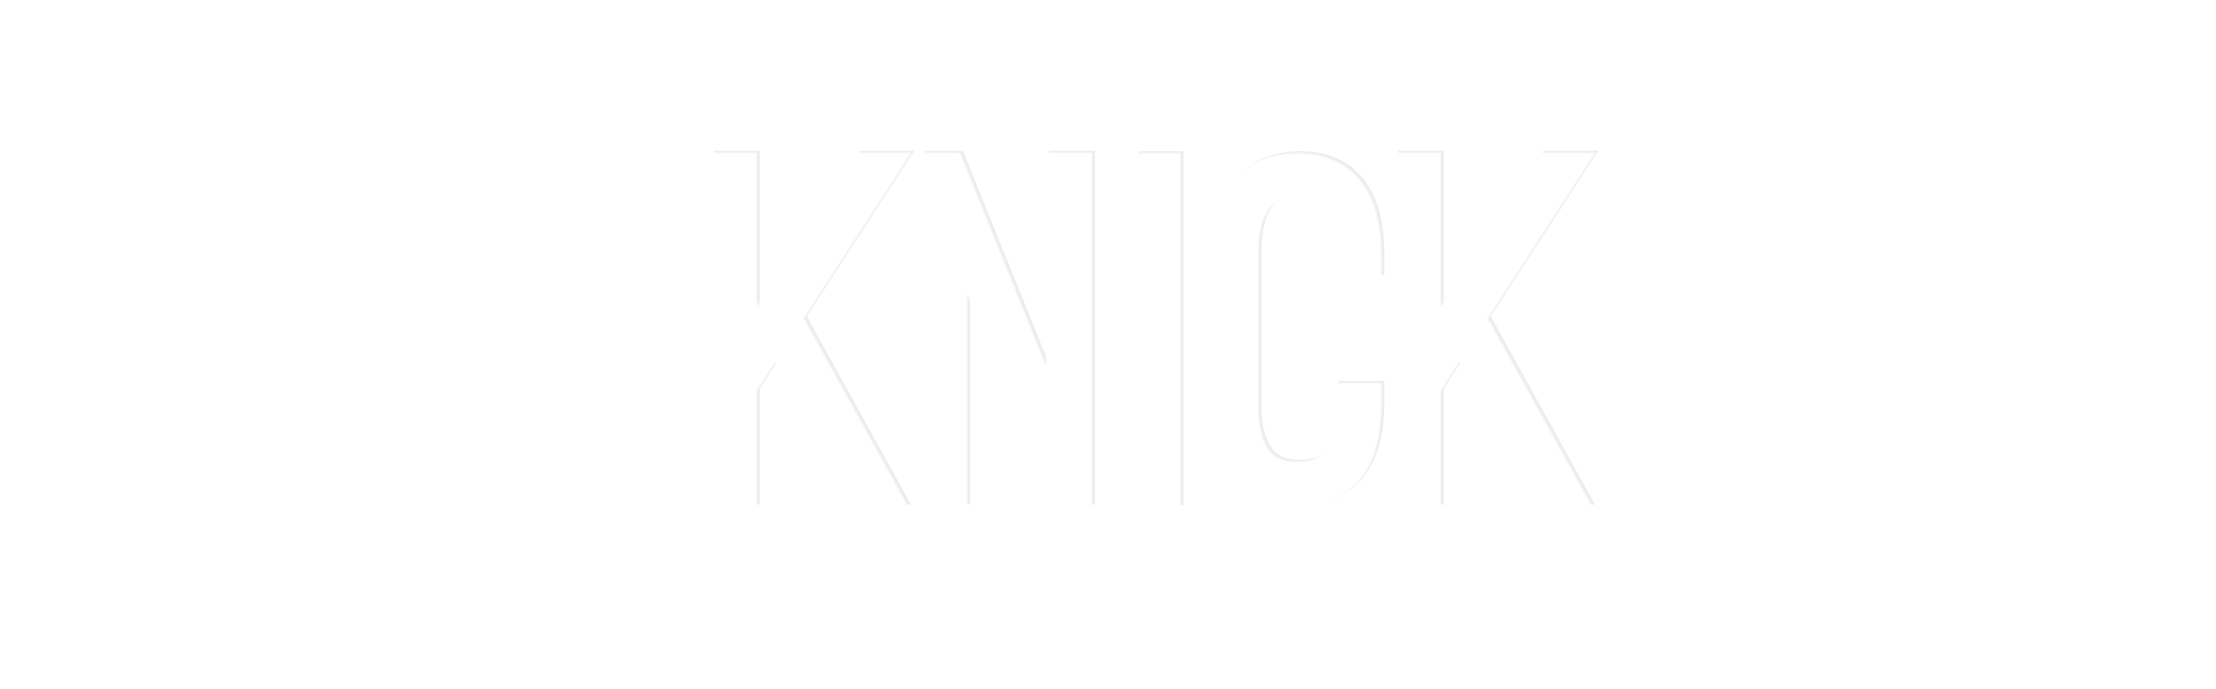 Knickerbocker Logo - The Knickerbocker Hotel NYC. Luxury Hotel In Times Square New York